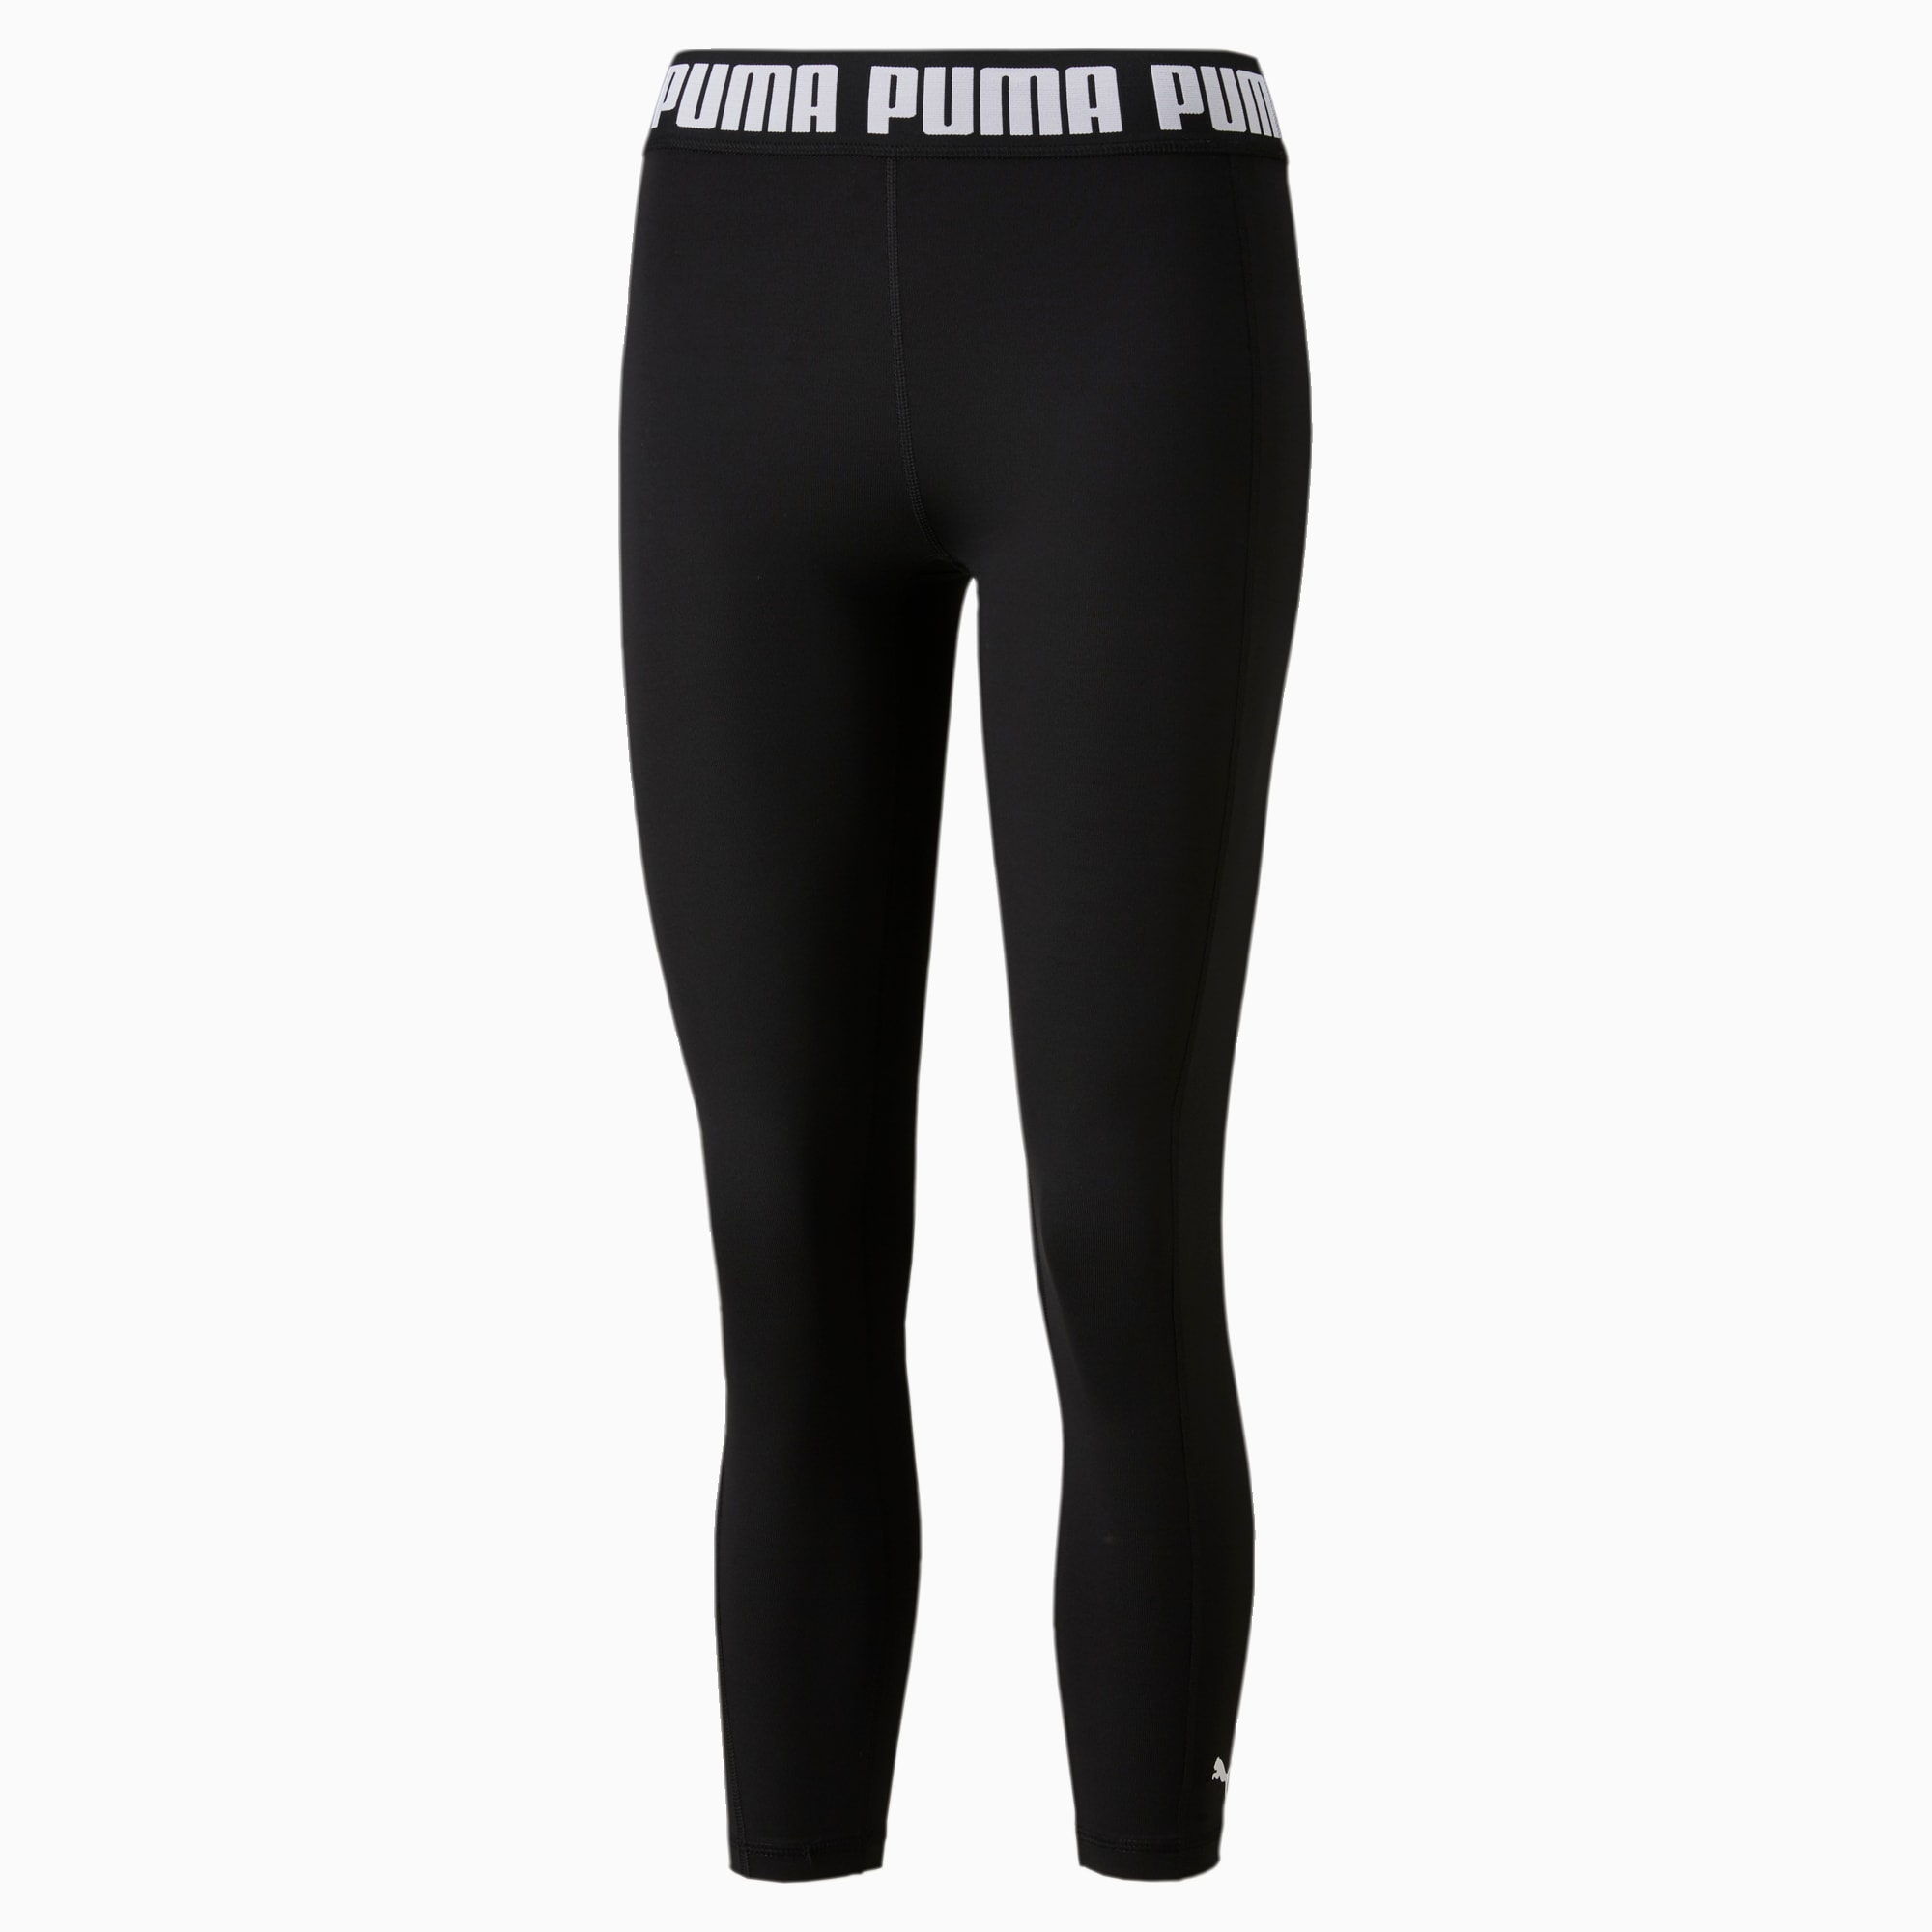 PUMA Strong High Waisted Women's Training Leggings, Black, Size S, Clothing